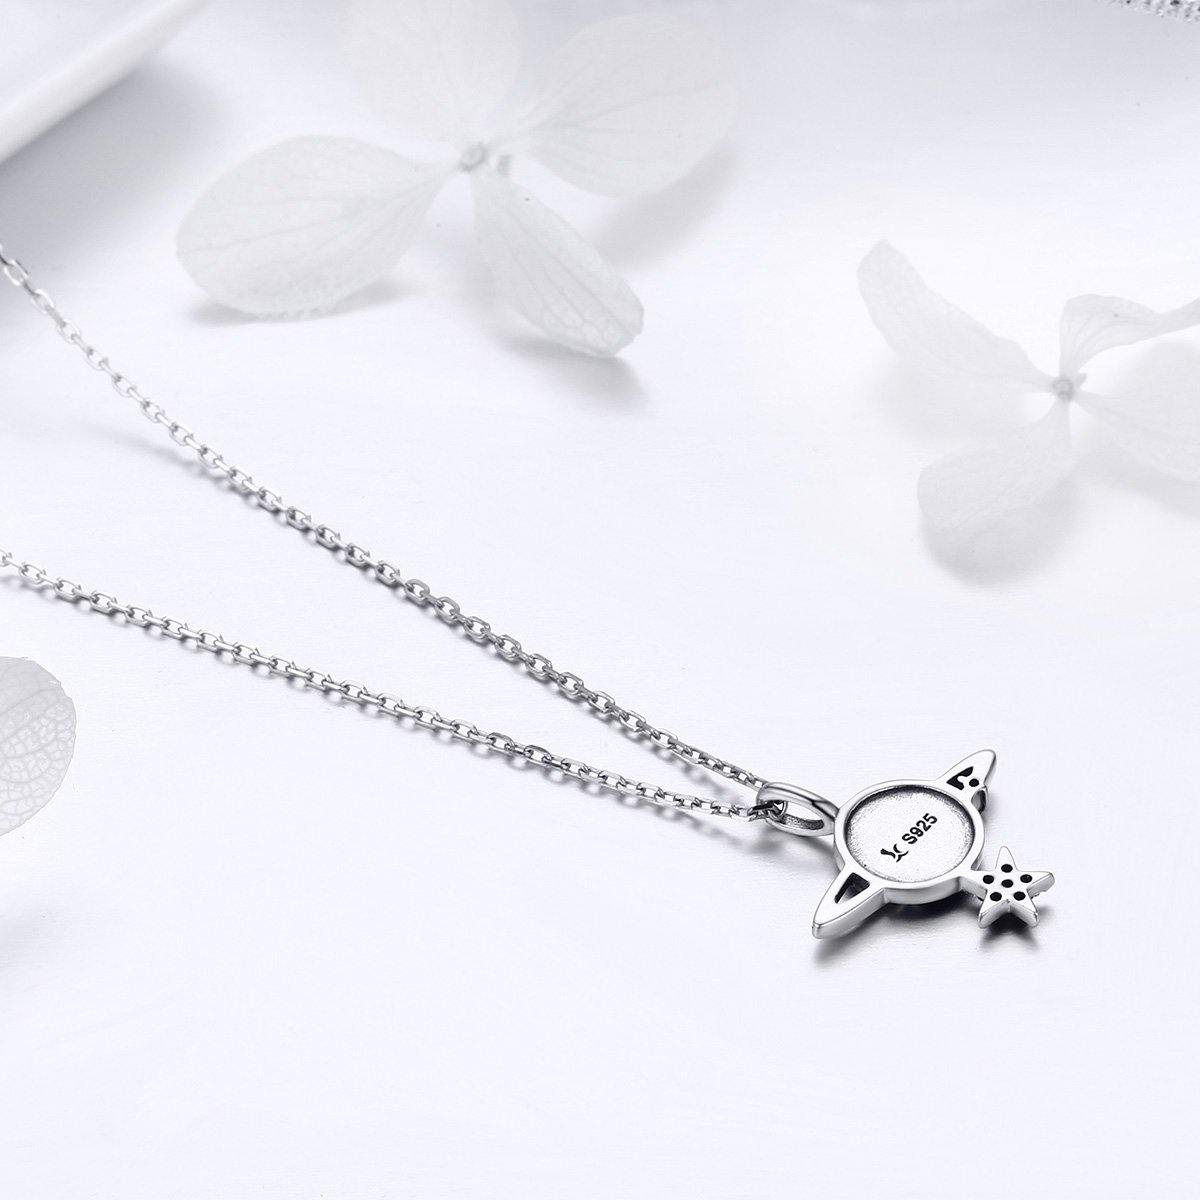 Secret Planet 925 Sterling Silver Necklace - Aisllin Jewelry